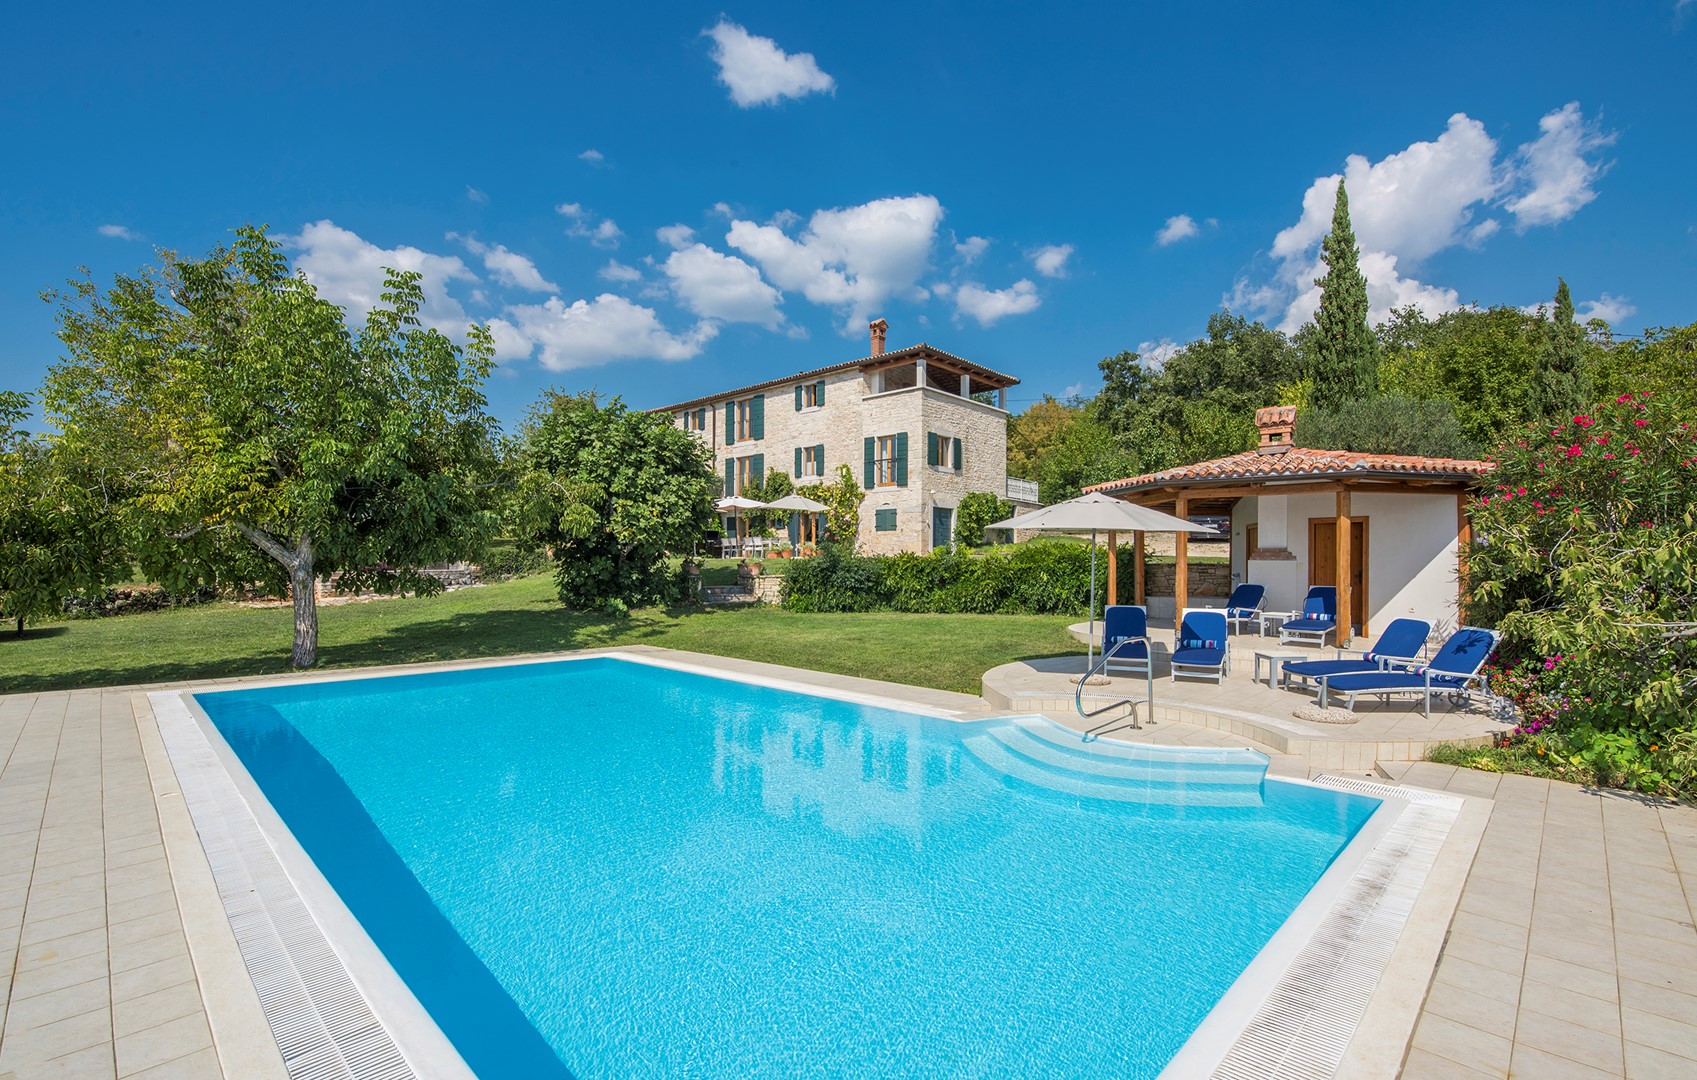 Villa Moncitta mit privatem Pool in Zentral-Istrie  in Kroatien